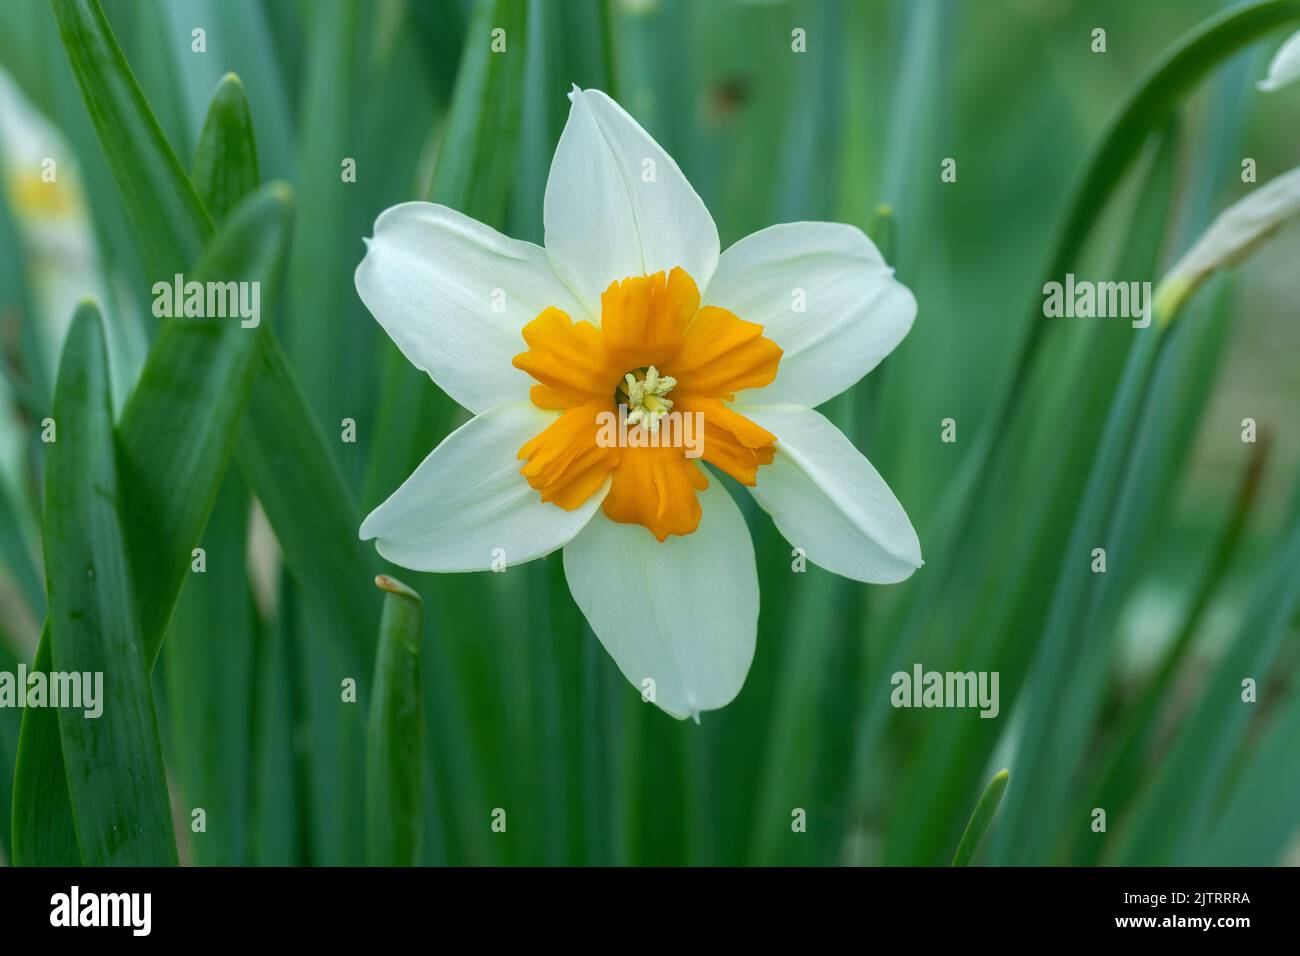 Small-cupped white daffodil with orange corona. Stock Photo